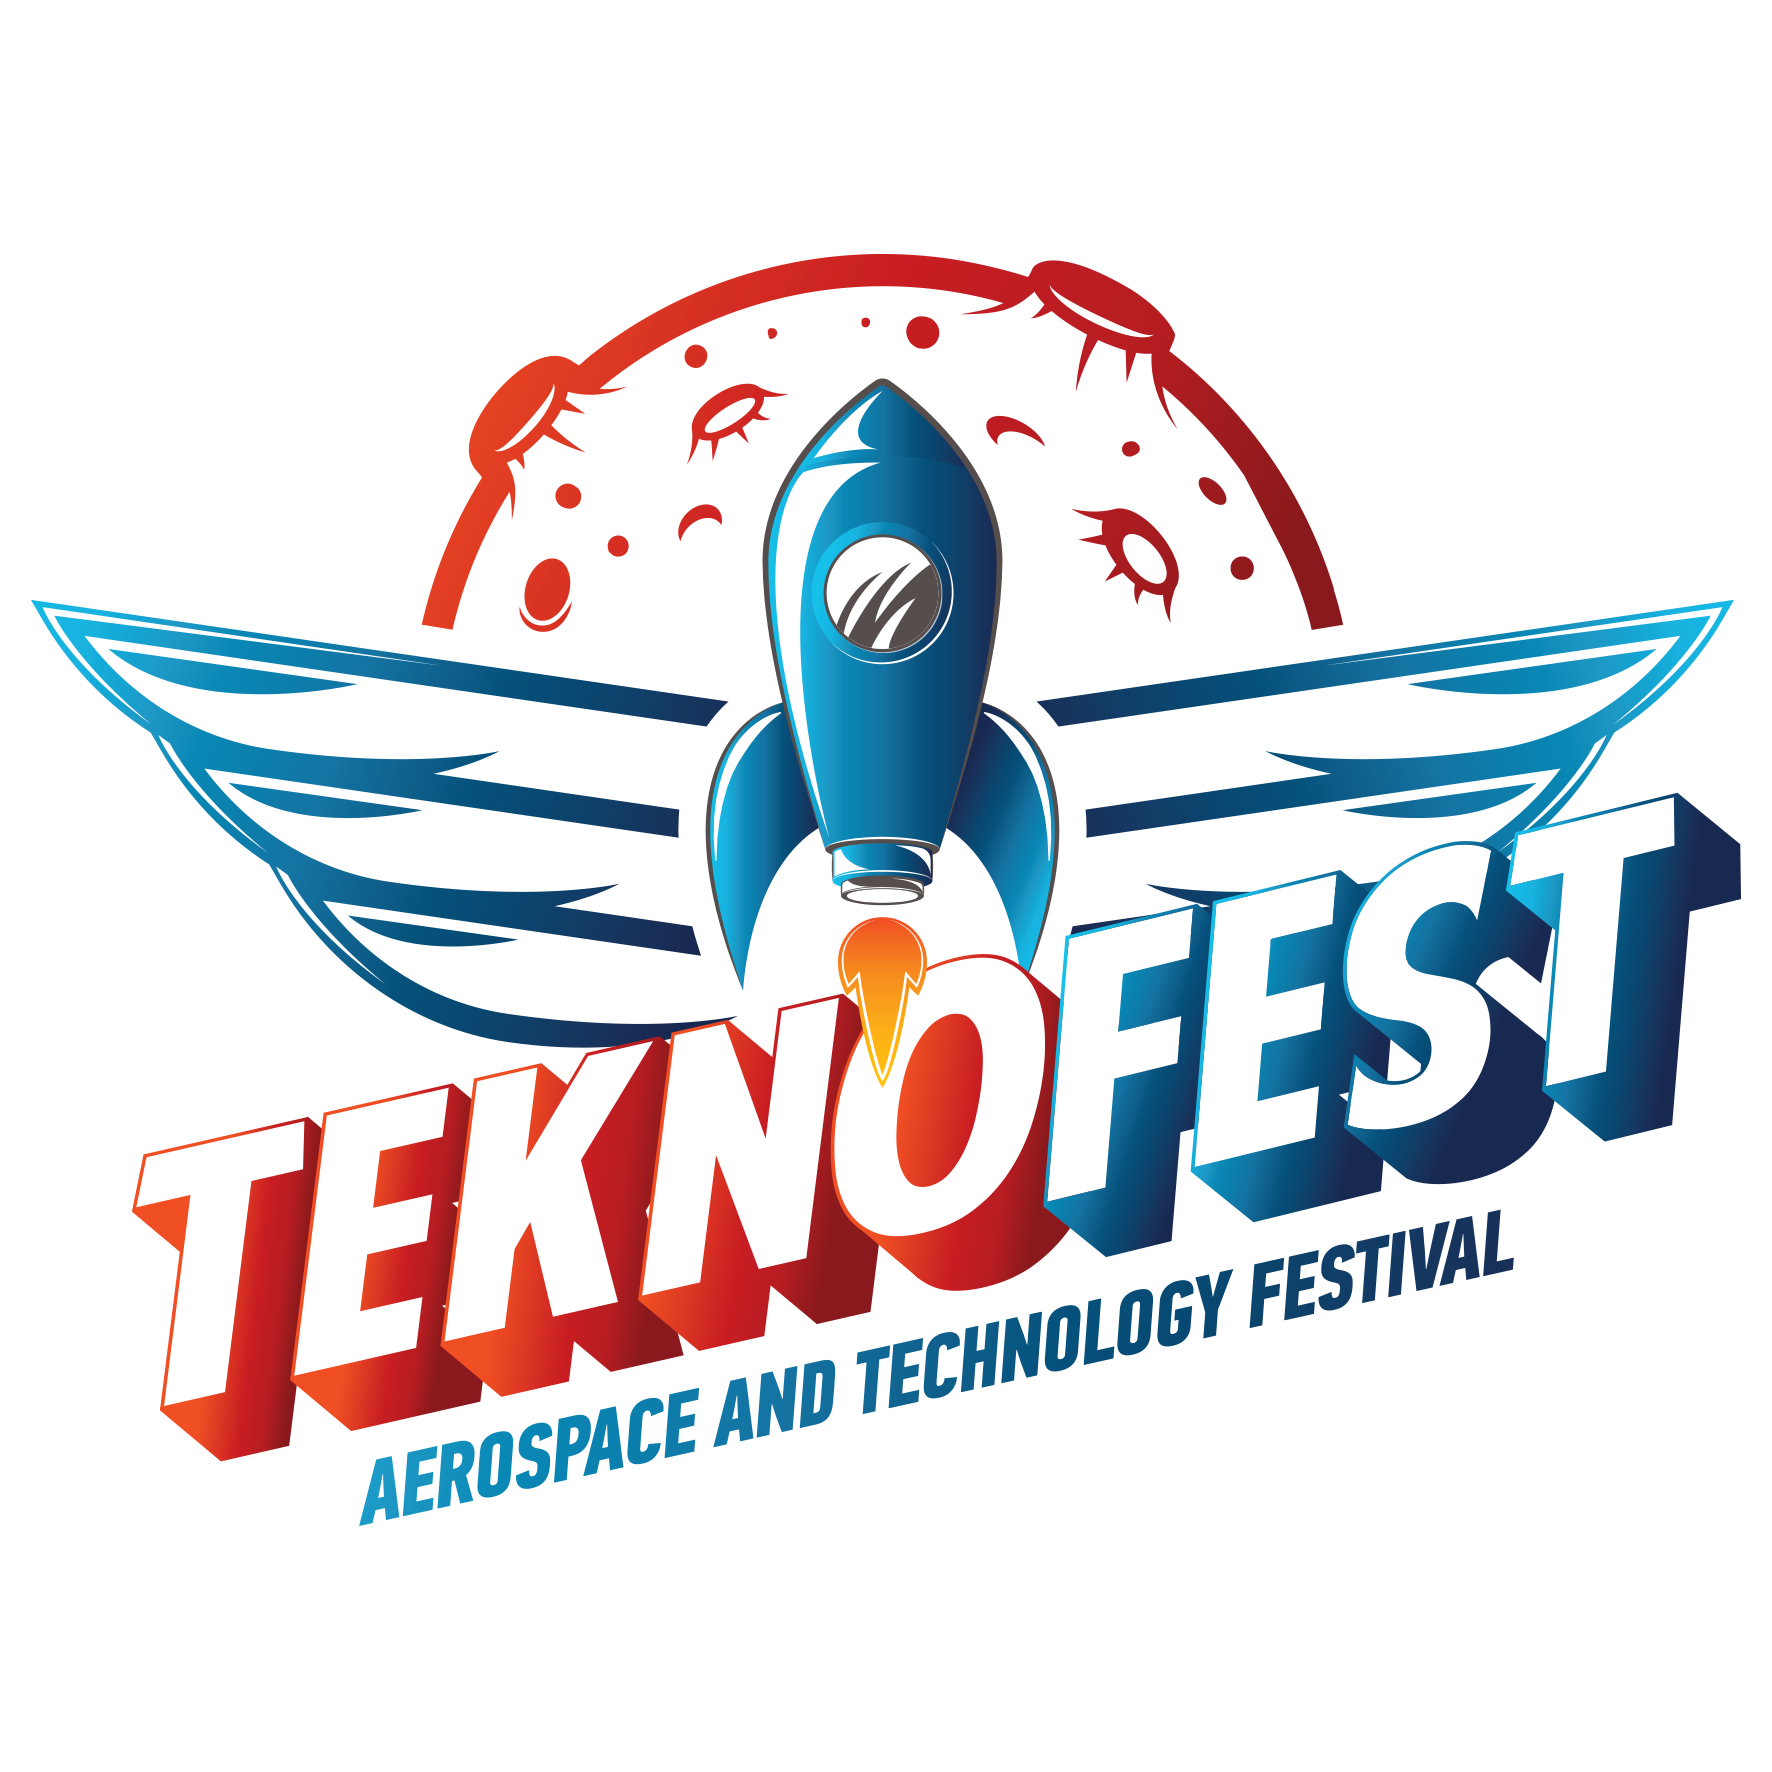 teknofest